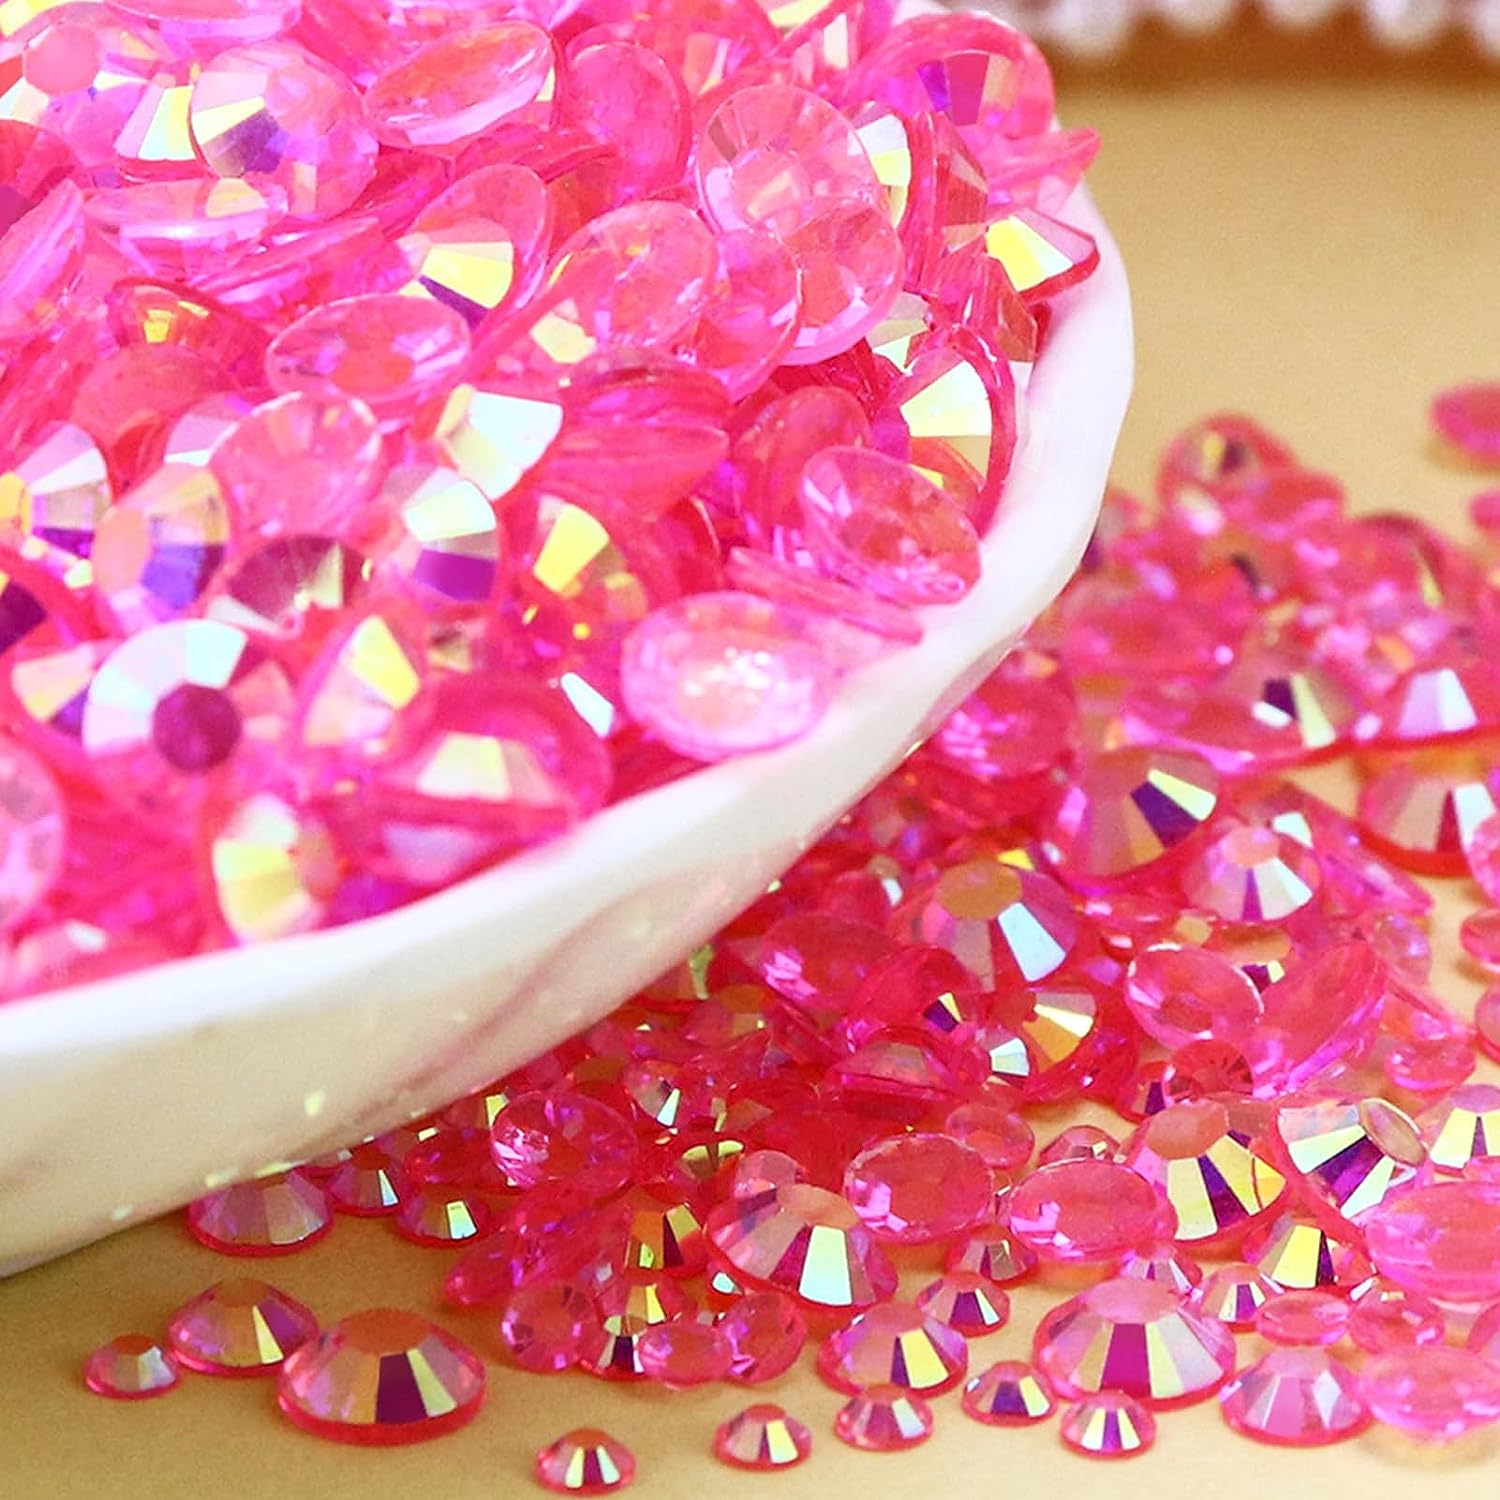  CLRDIVA Bulk 18000PCS Mix 3MM 4MM 5MM Rose Hot Pink AB Resin  Flatback Rhinestones Jelly Gems, Wholesale Flat Back Crystals Stones Diamonds  for Crafts, Tumblers, Makeup, Nails (Hot Pink AB) 